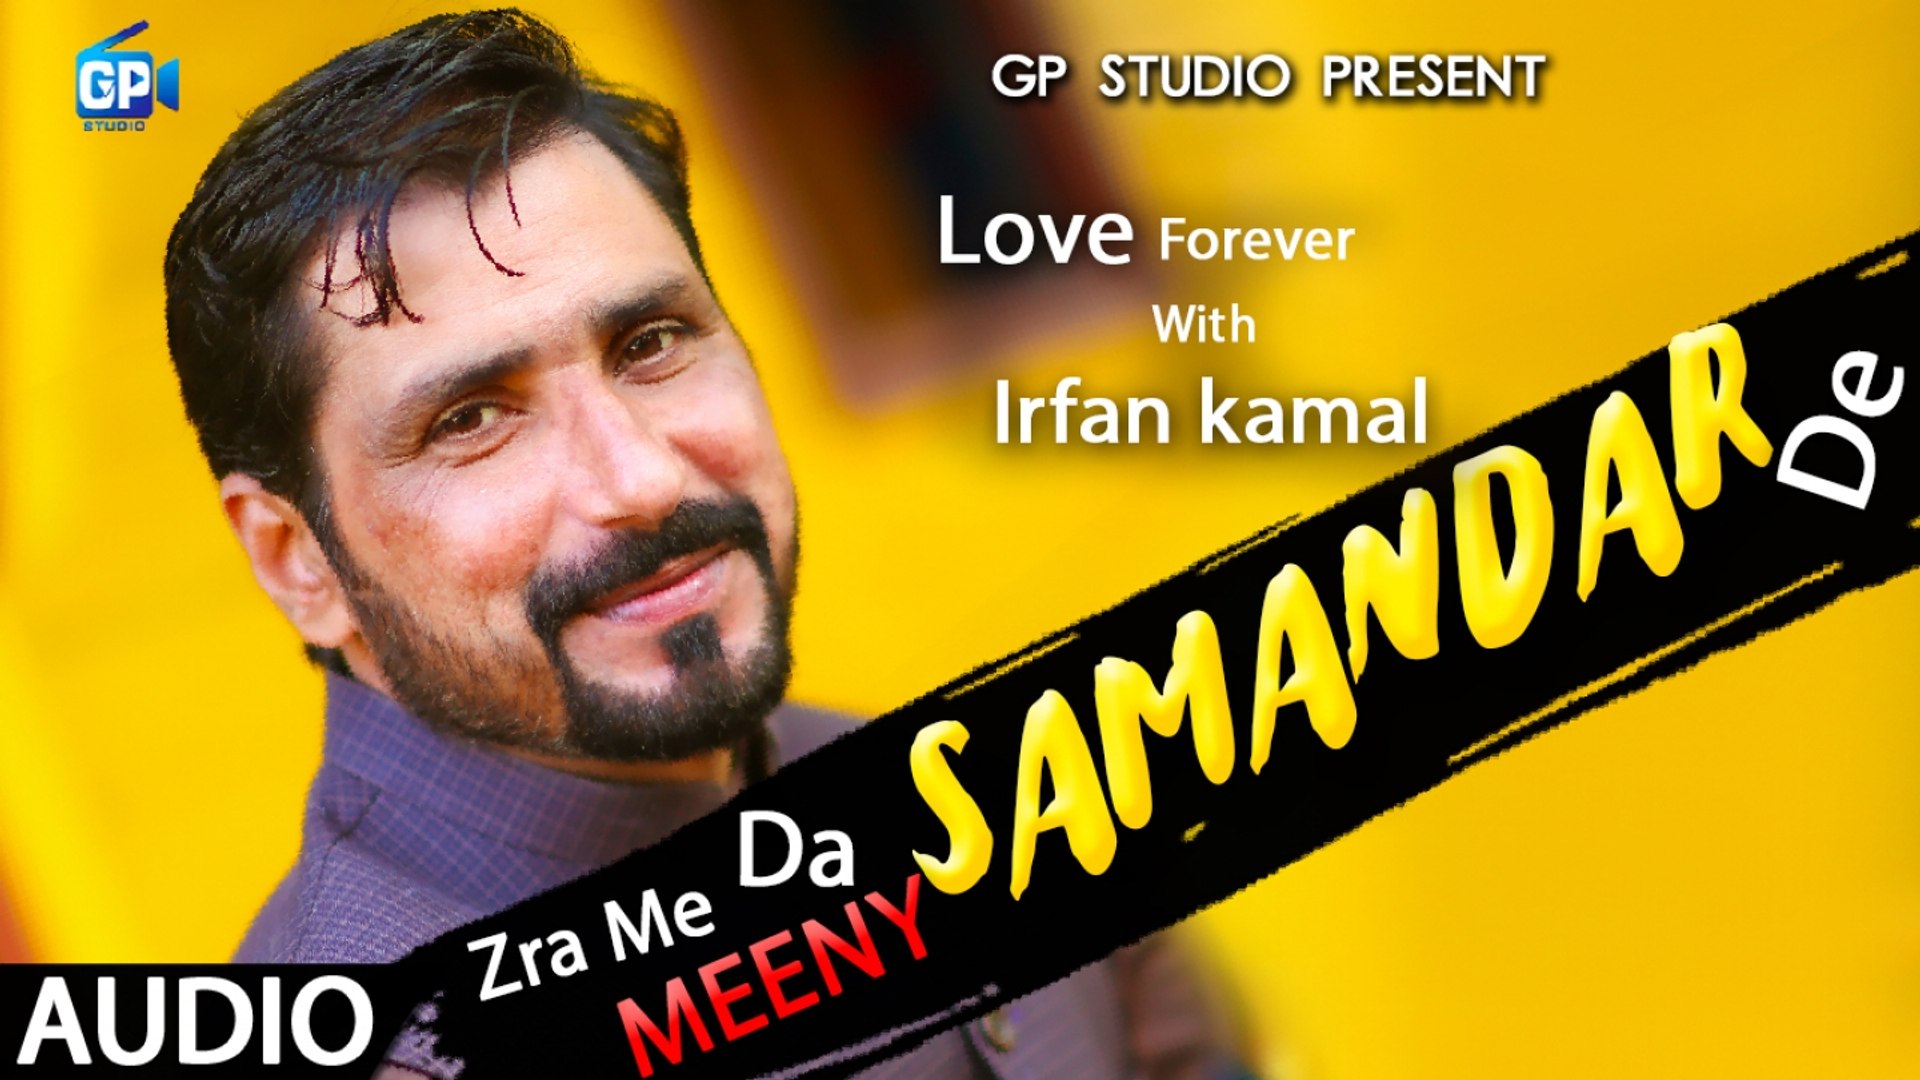 Zra Me Da Meny Samandar De Irfan Kamal Pashto New Songs 2019 Pashto Audio Mp3 Songs 2019 2020 Video Dailymotion